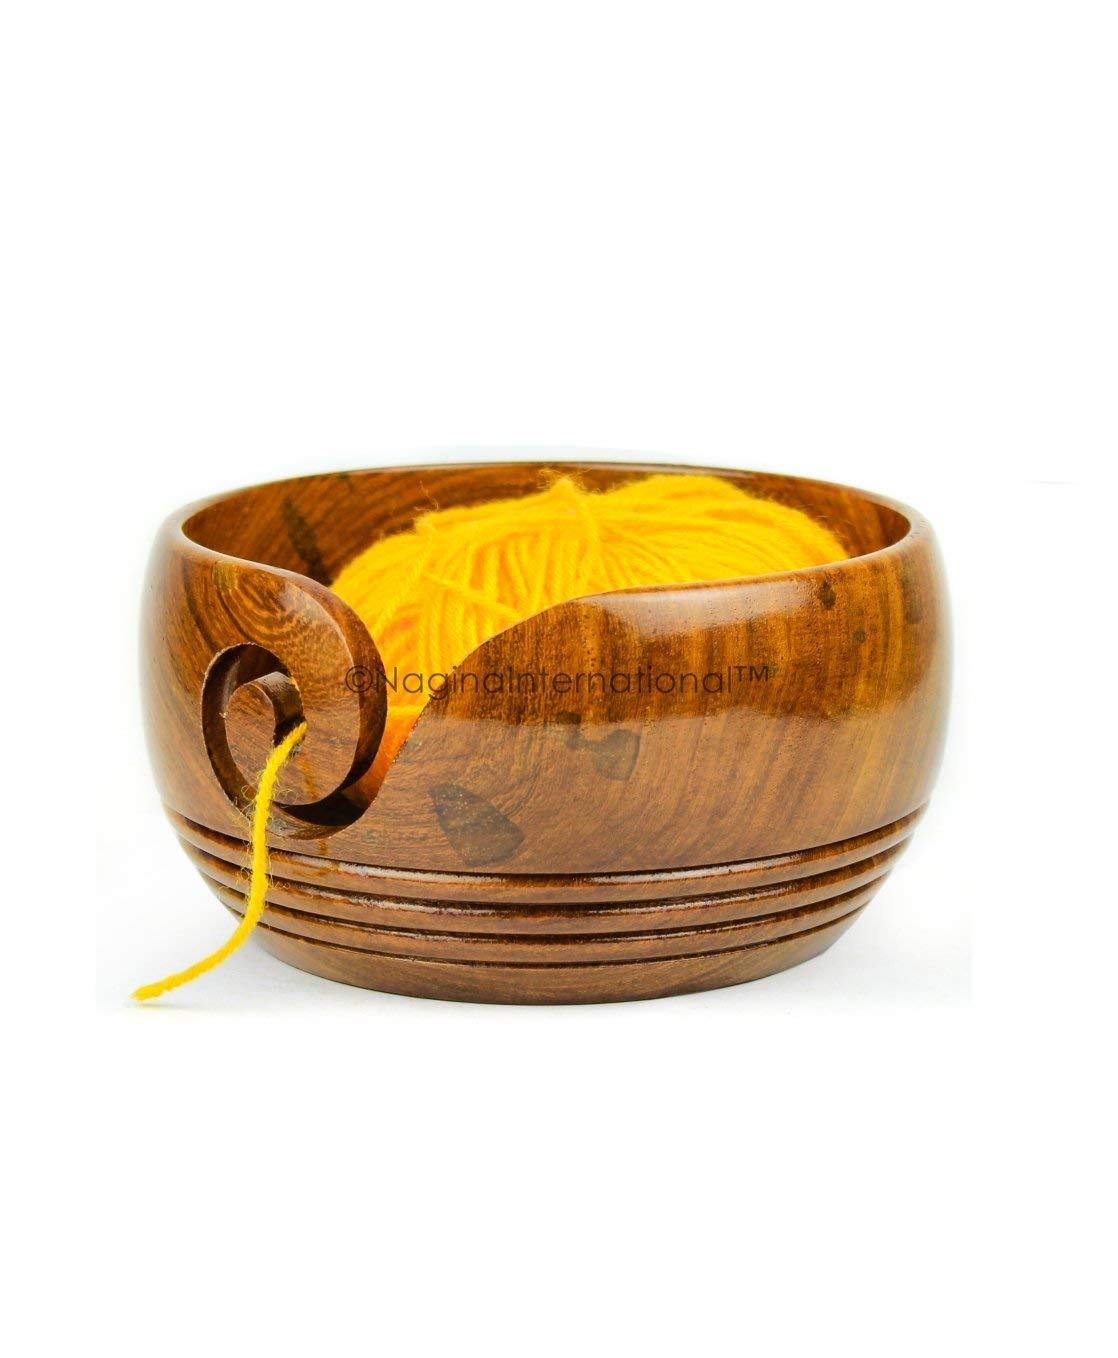 Solid Teak Wood Crafted Wooden Yarn Ball Storage Bowl with Spiral Yarn Dispenser & Decorative Rings | Knitting Crochet Accessories | Nagina International